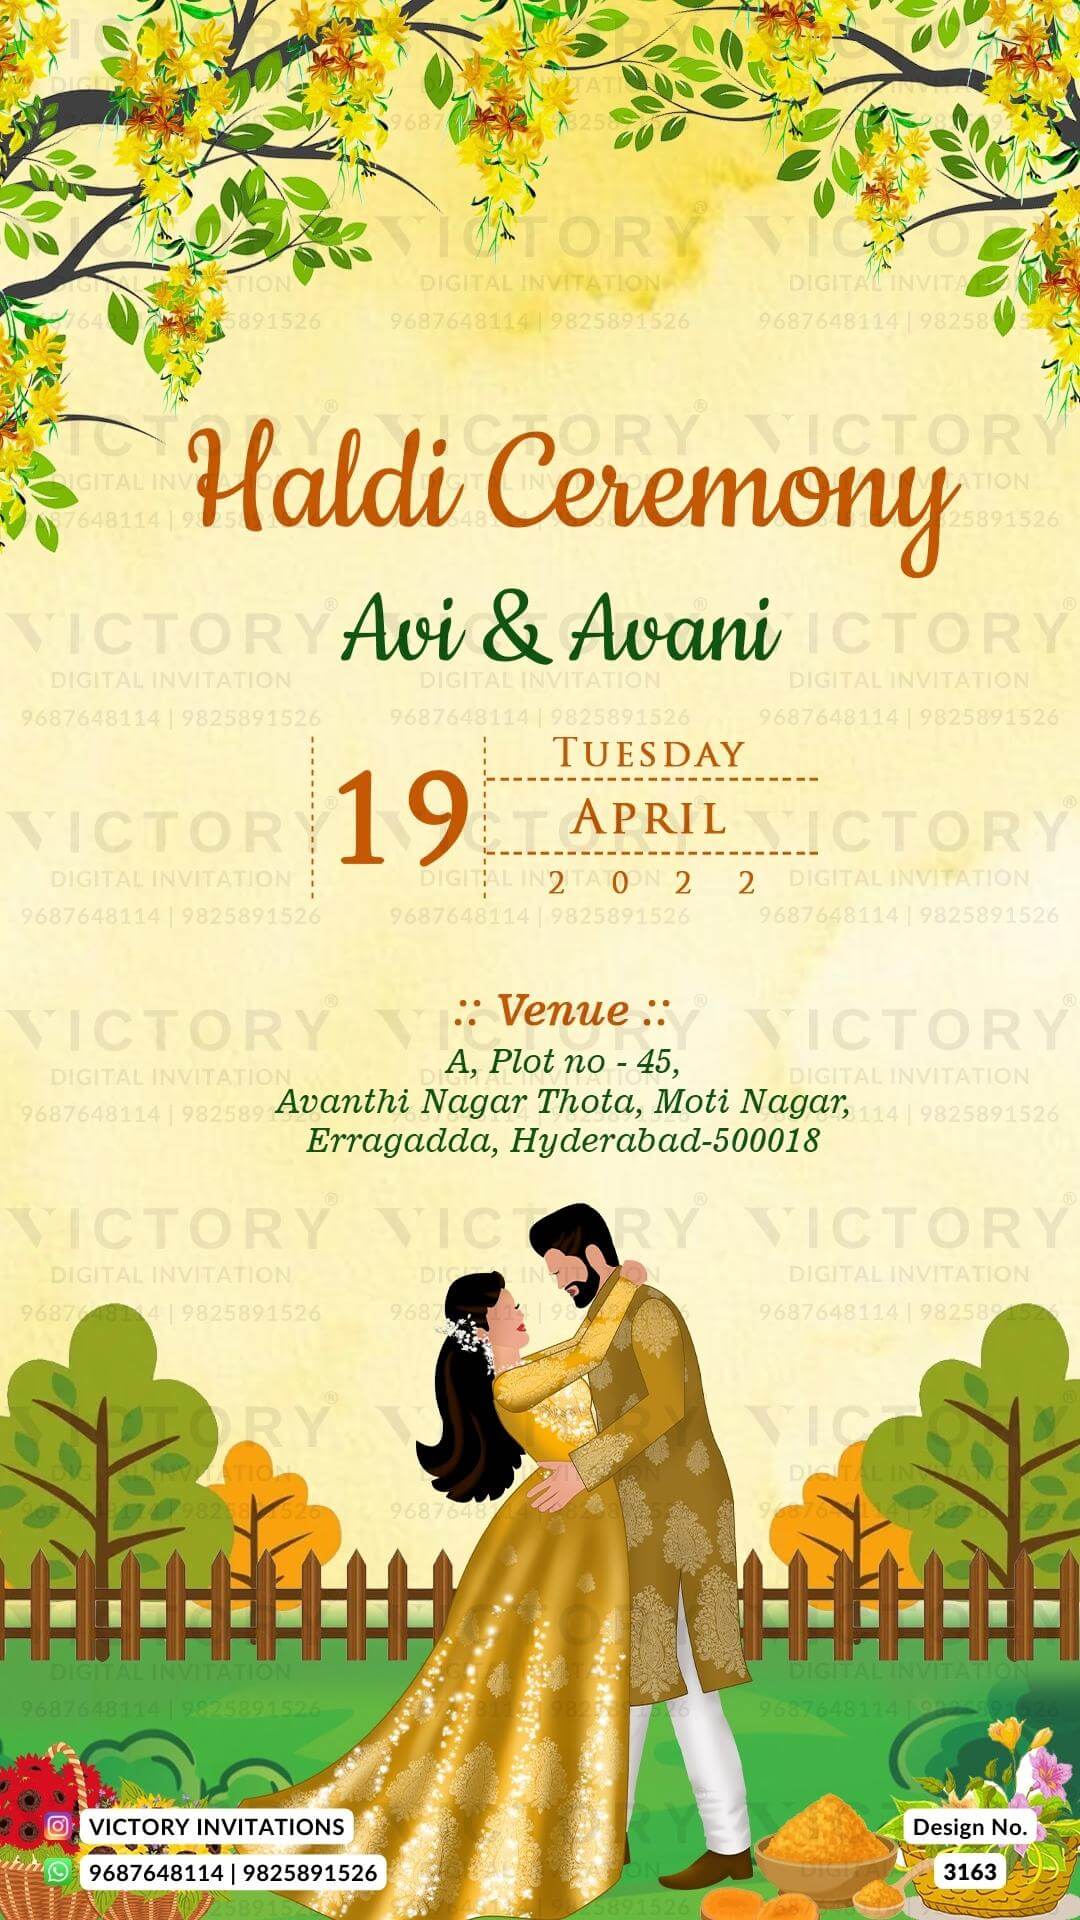 haldi ceremony digital invitation card design number 3163